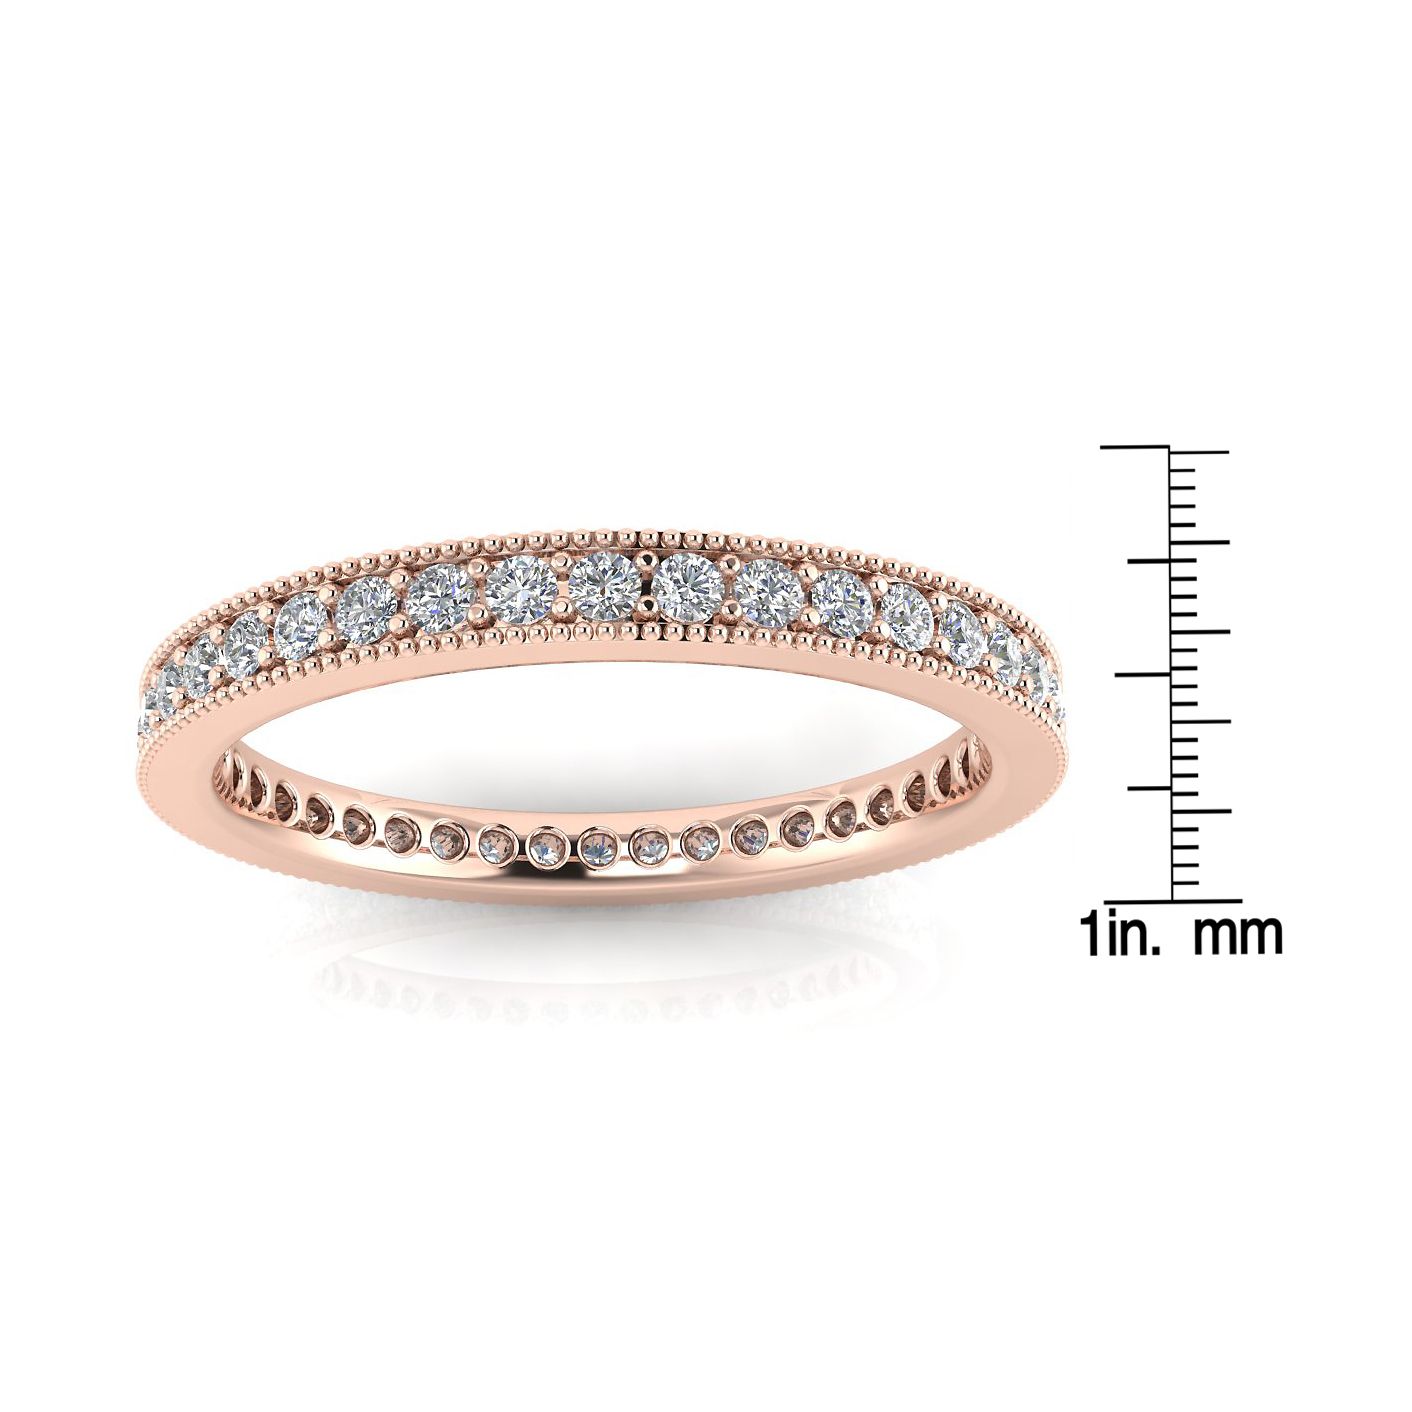 Round Brilliant Cut Diamond Pave & Milgrain Set Eternity Ring In 14k Rose Gold  (0.5ct. Tw.) Ring Size 7.5